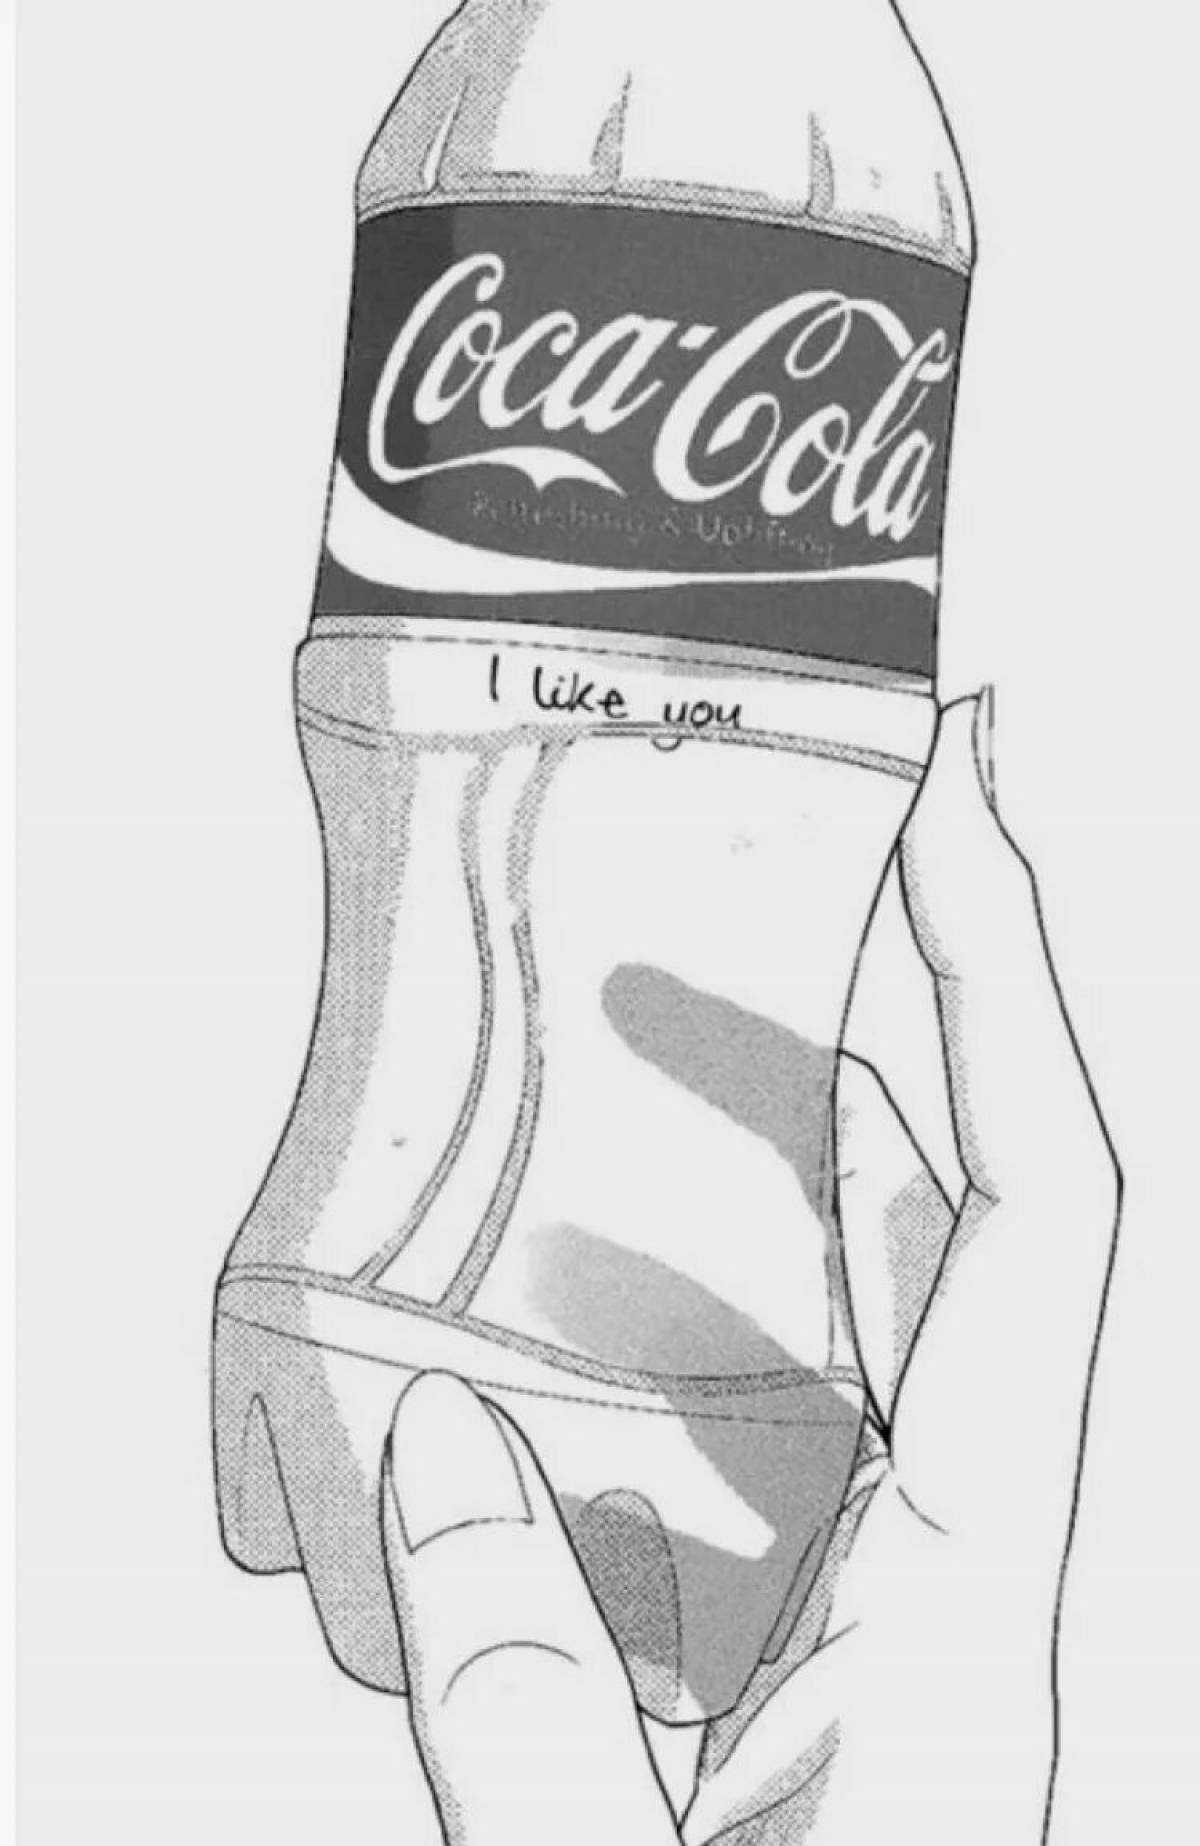 Coca cola fun coloring book